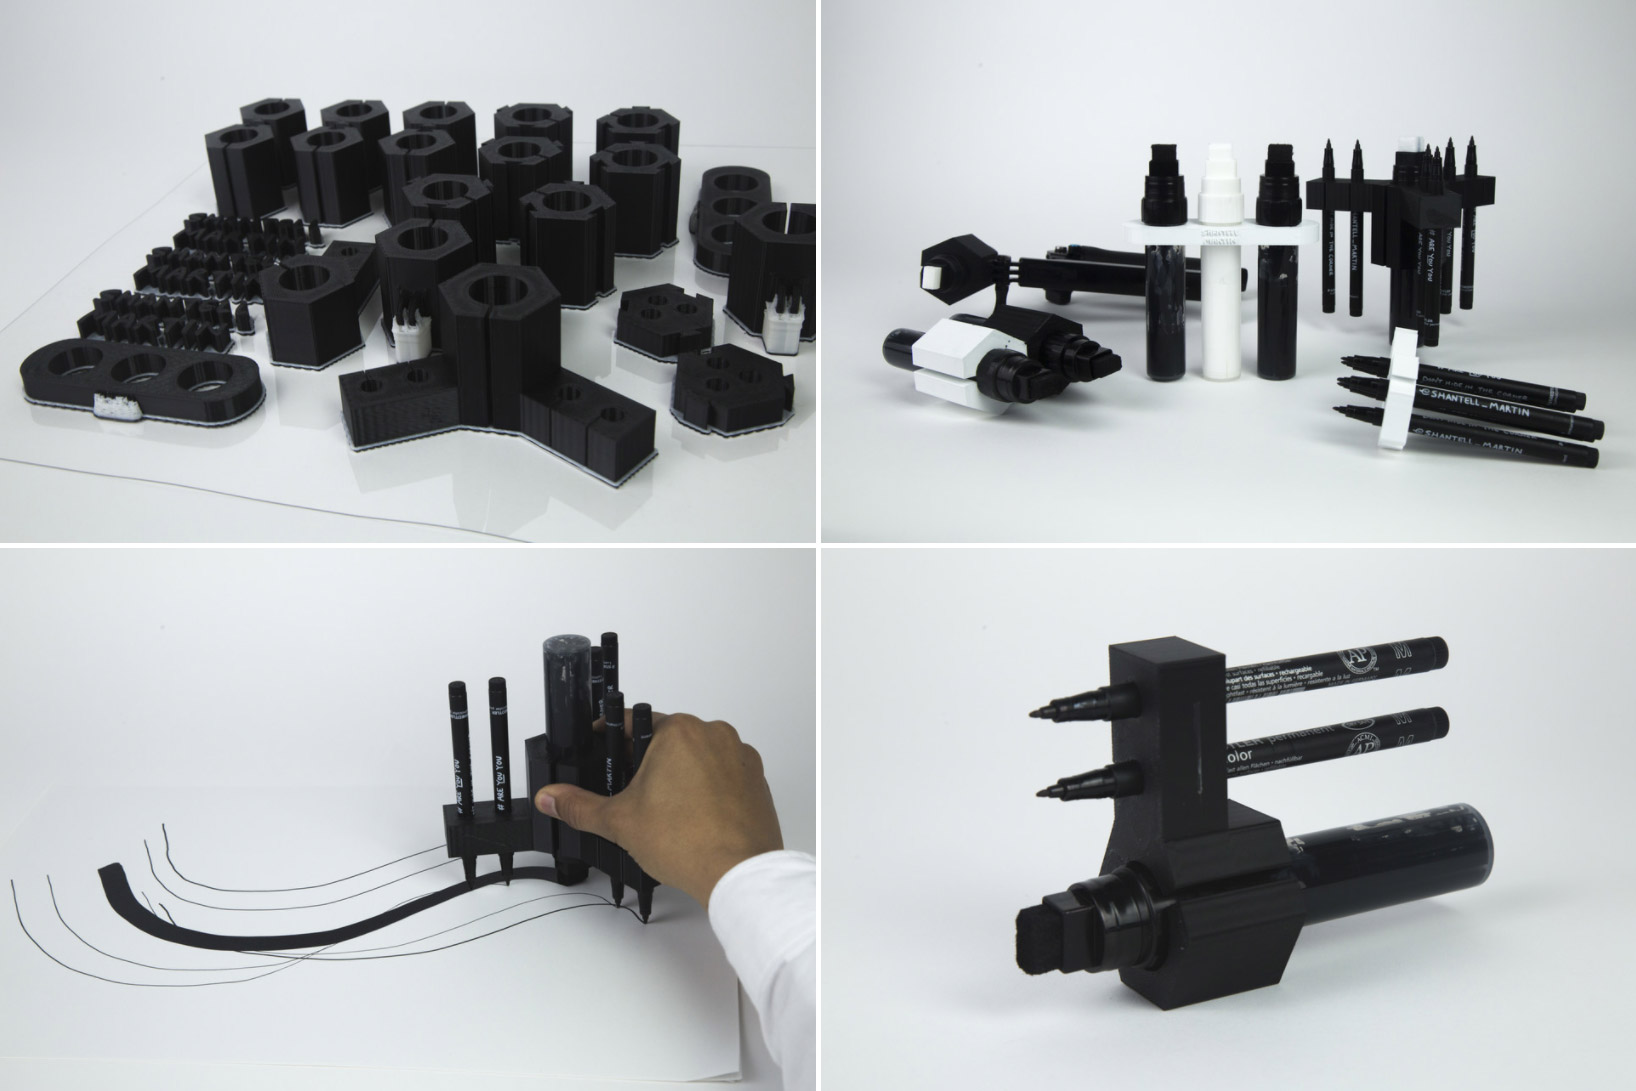 3D Printed Drawing Tools by Shantell Martin